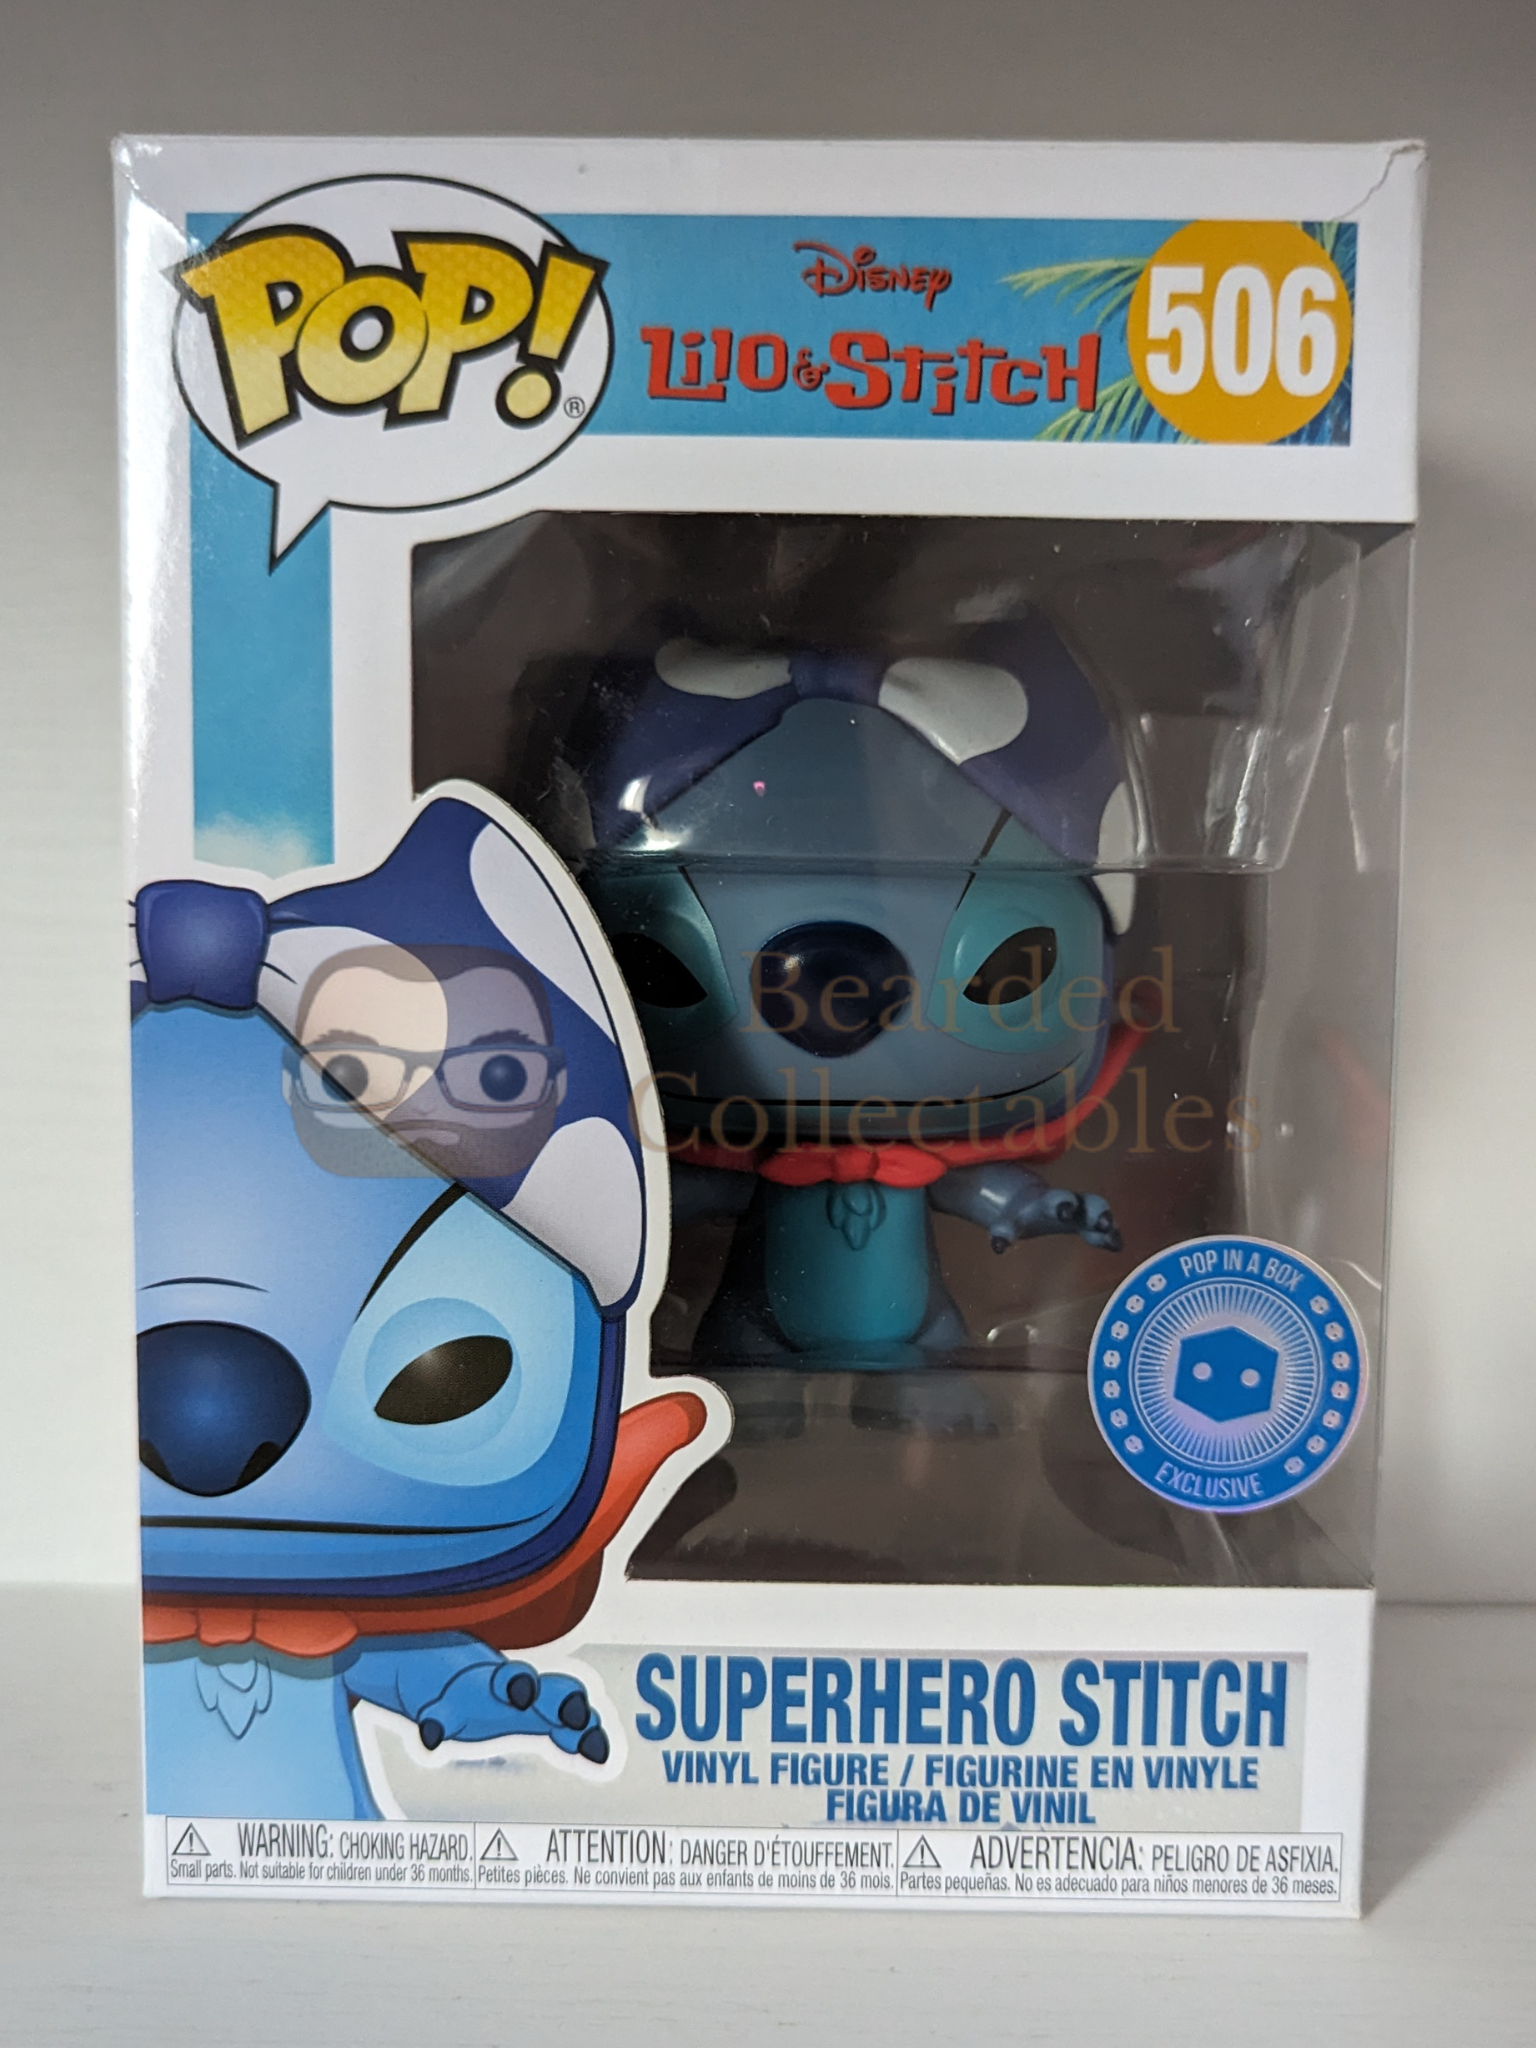 Superhero Stitch Funko Pop! – Bearded Collectables